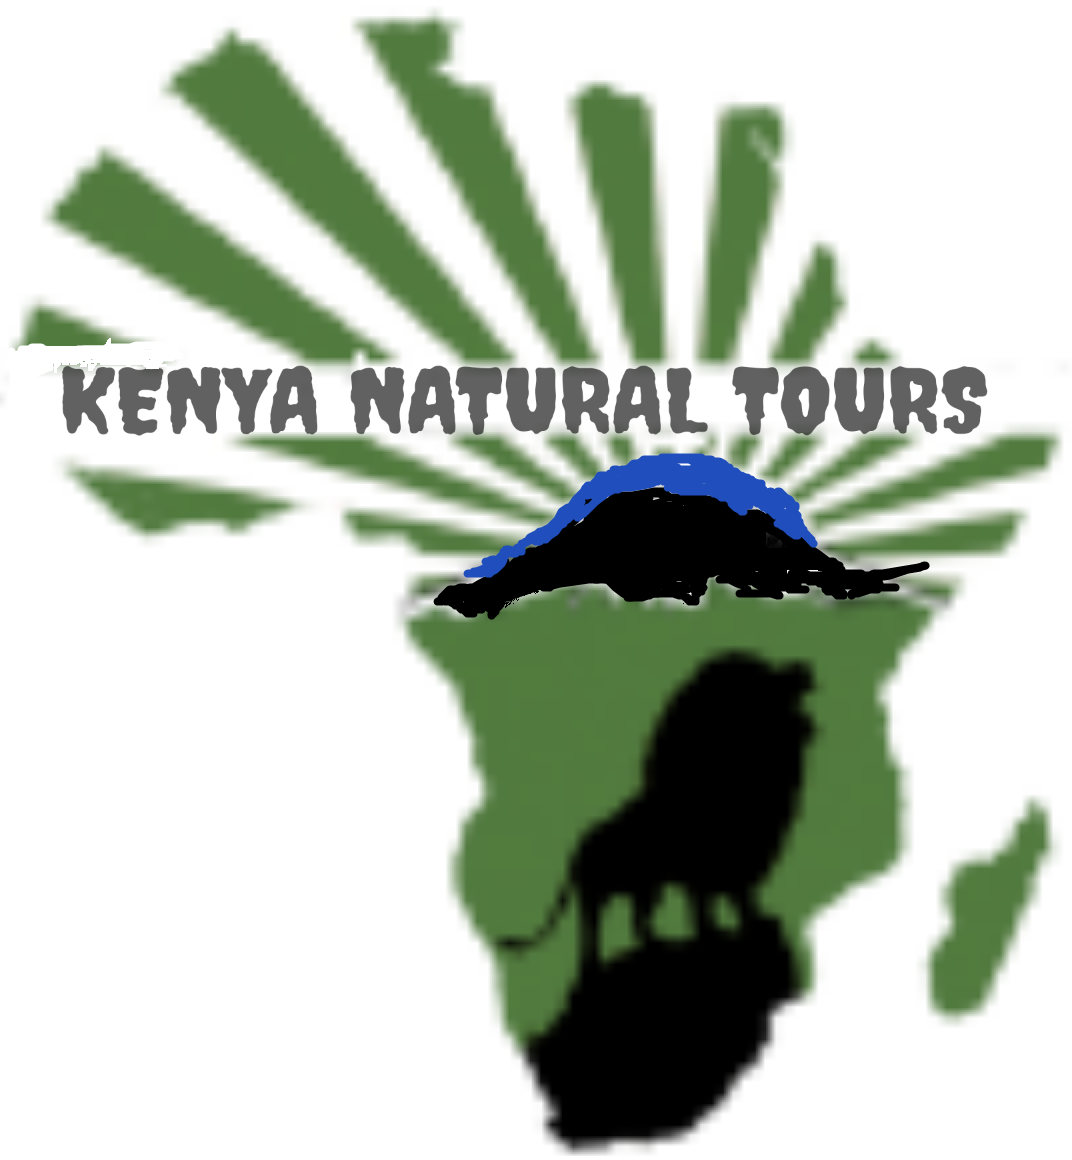 Kenya Natural Tours